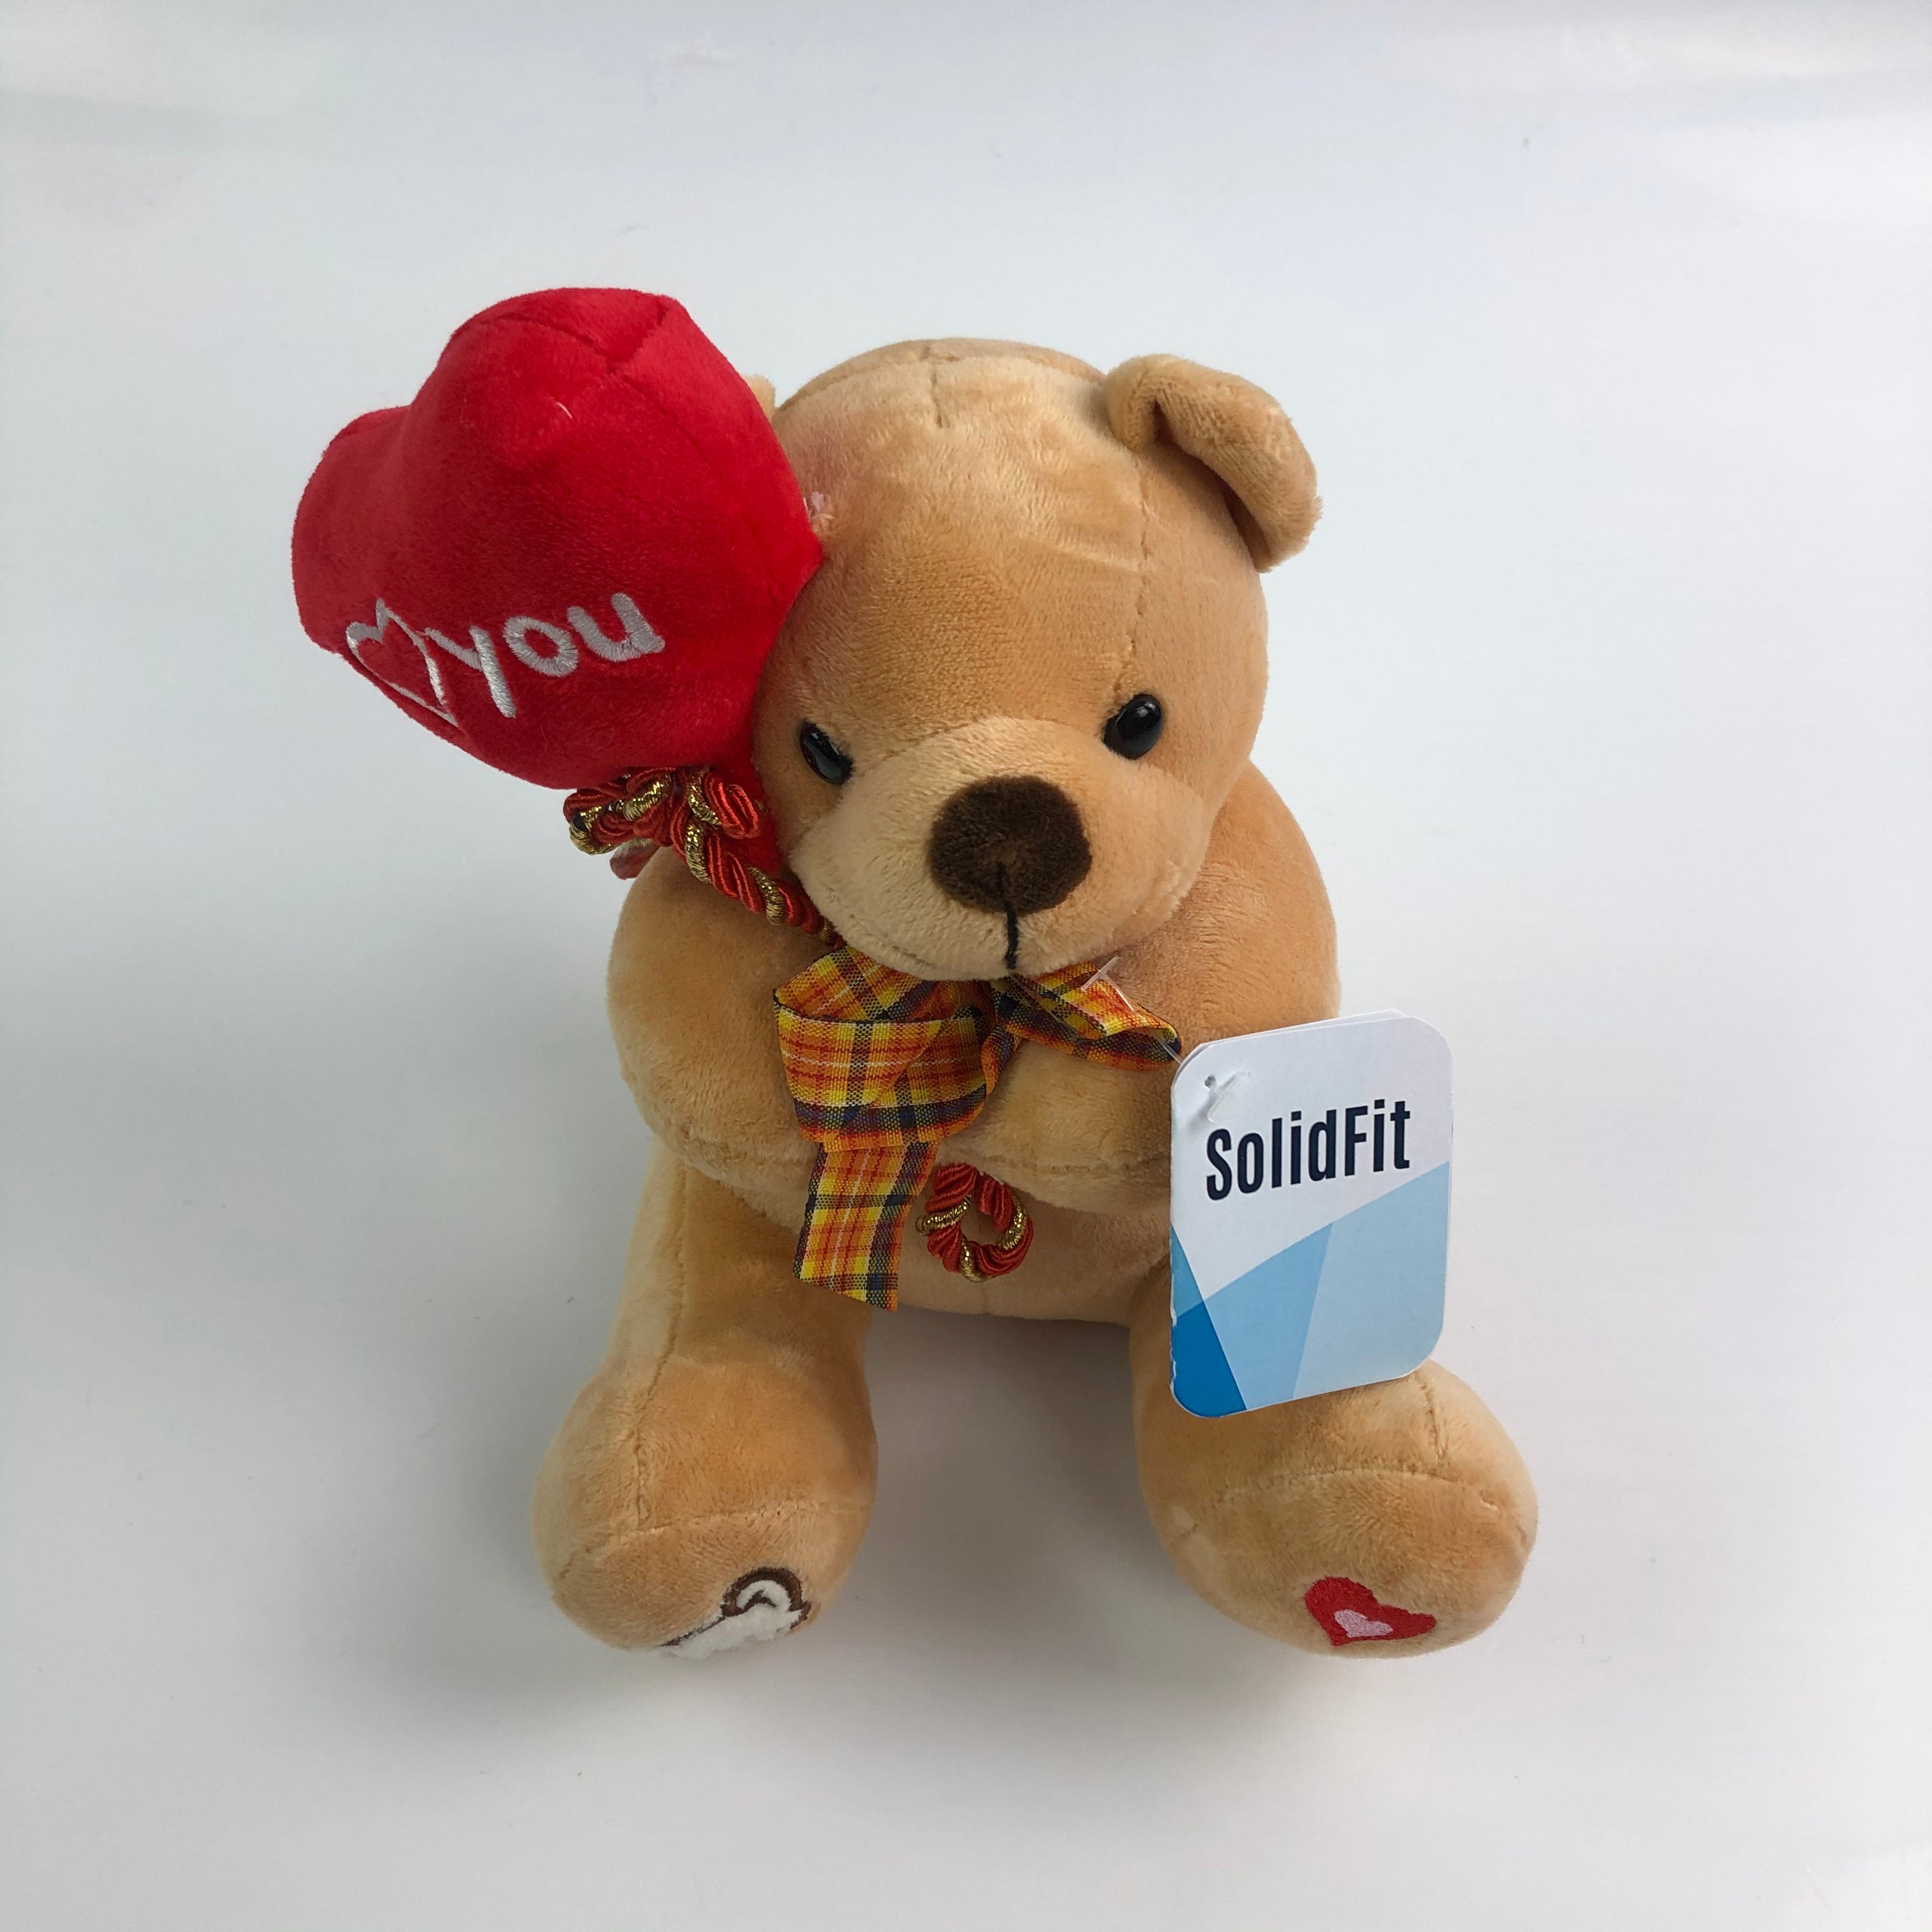 SolidFit Teddy Bear Stuffed Animal - Glow Guards